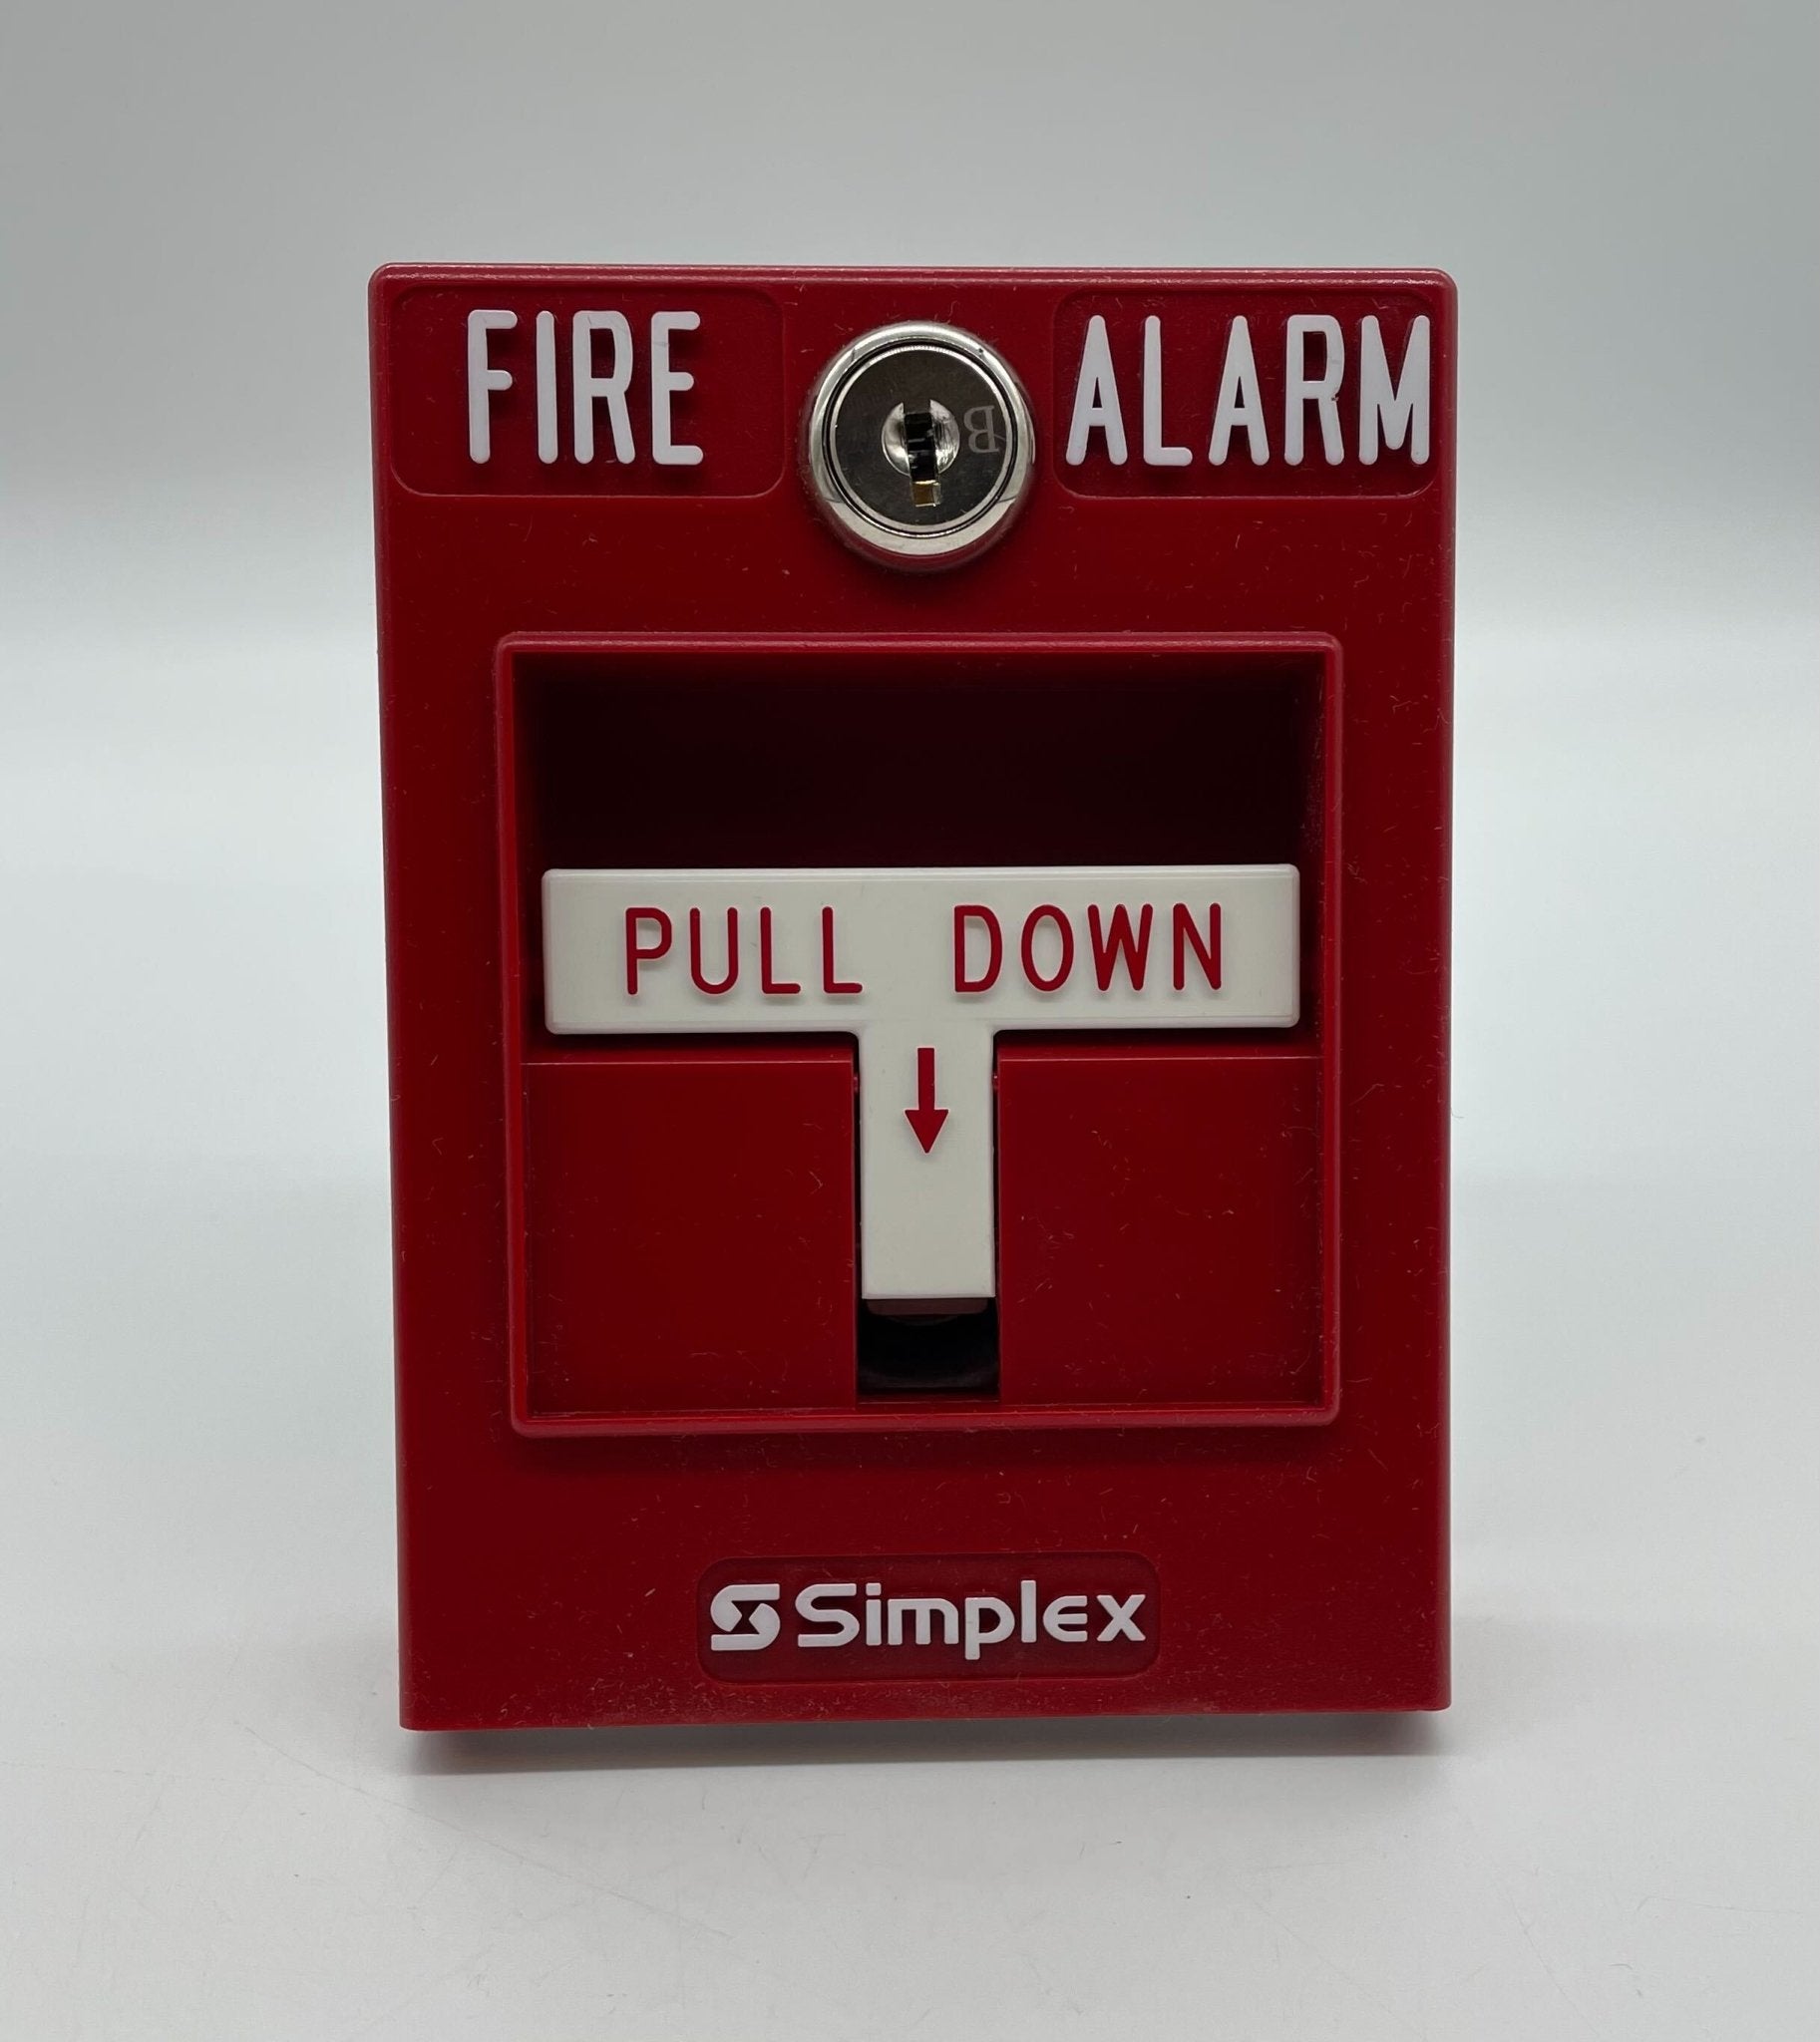 Simplex 2099-9101 - The Fire Alarm Supplier